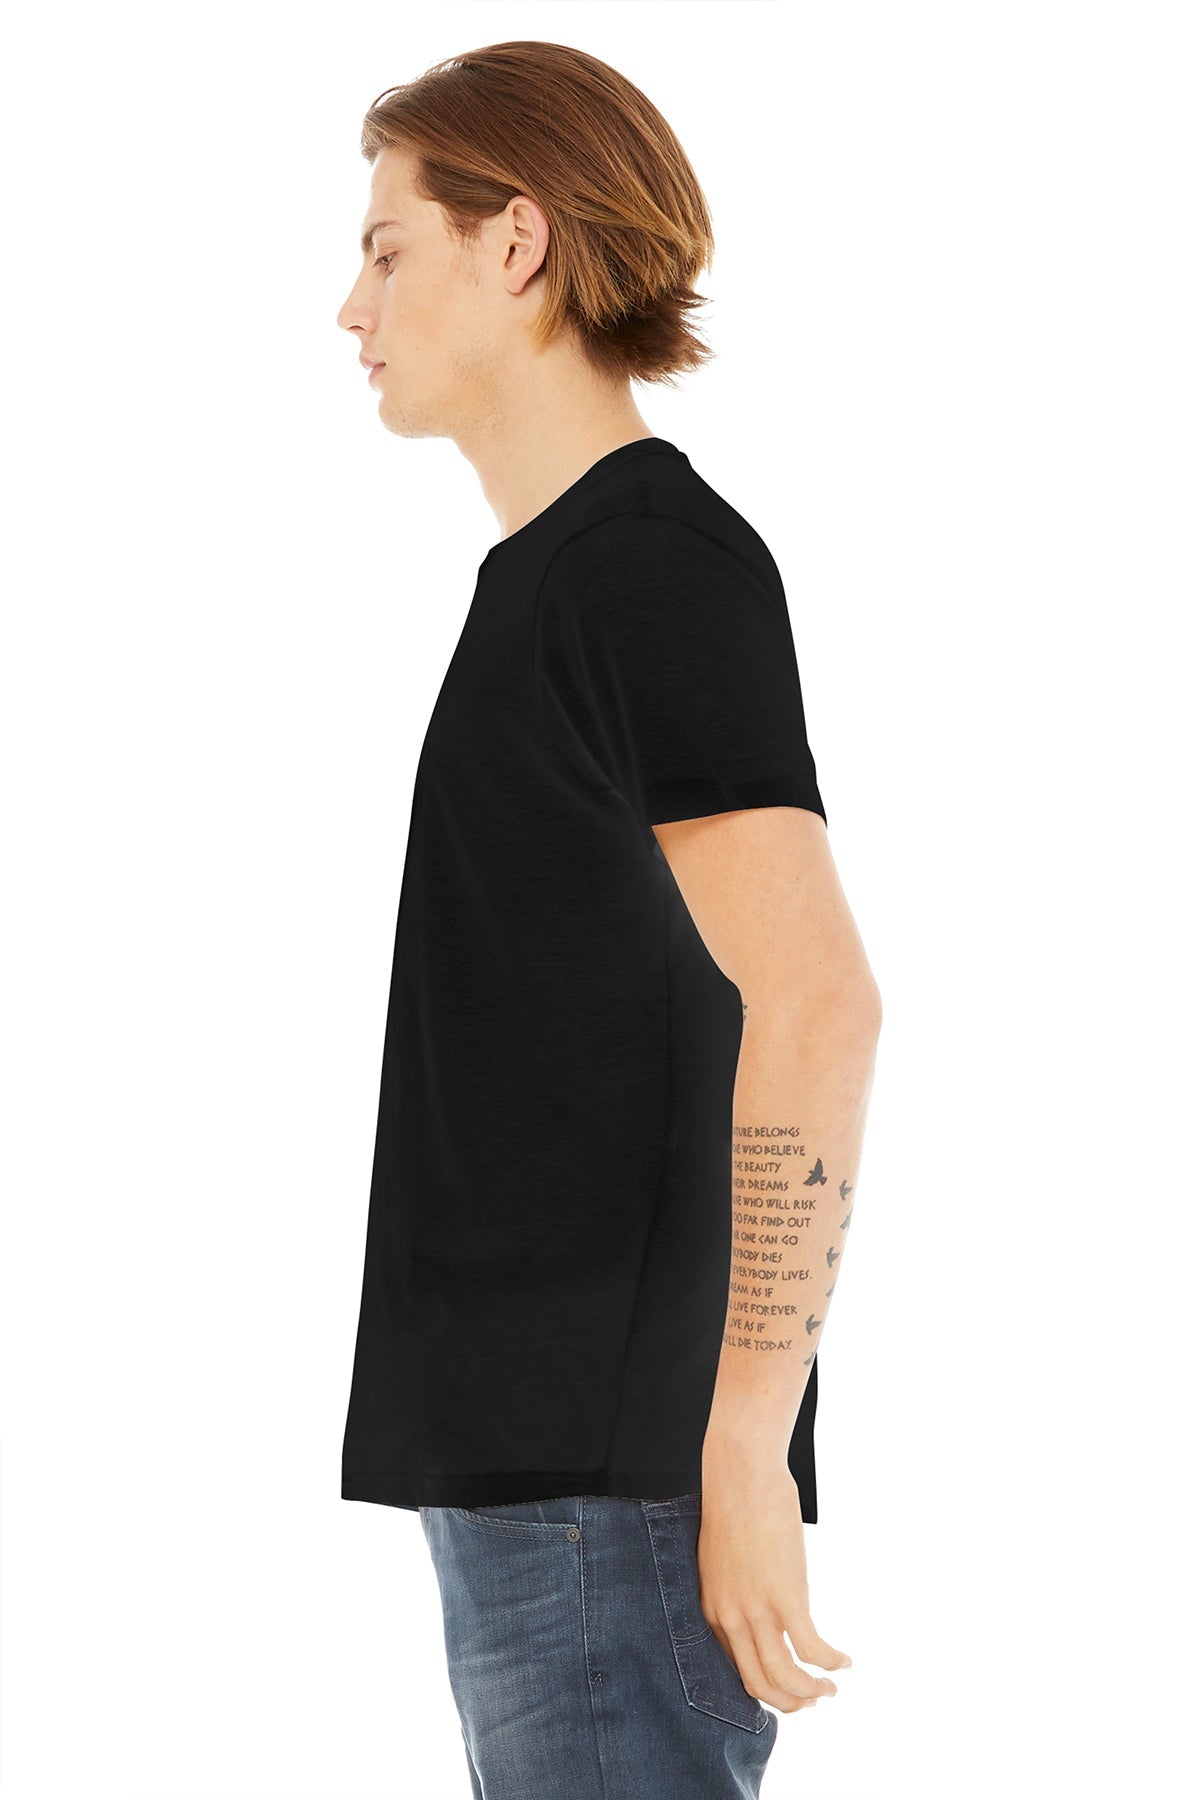 bella + canvas unisex poly-cotton short sleeve t-shirt 3650 black